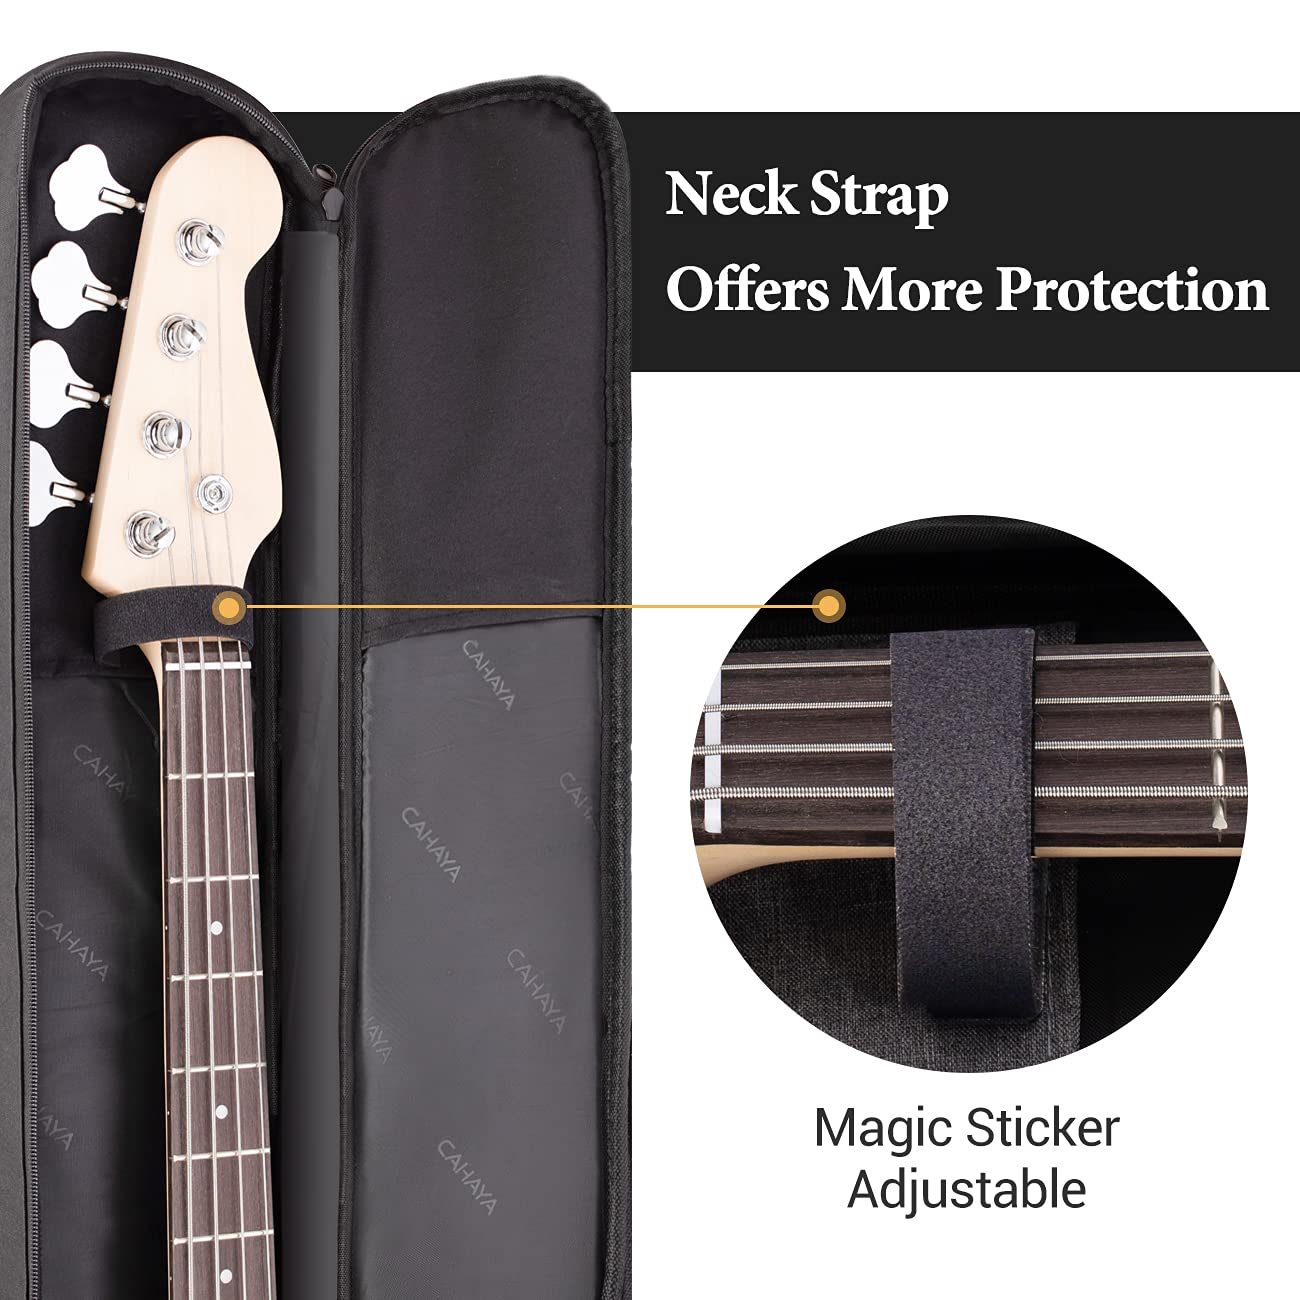 Bass Guitar Bag Backpack CY0202